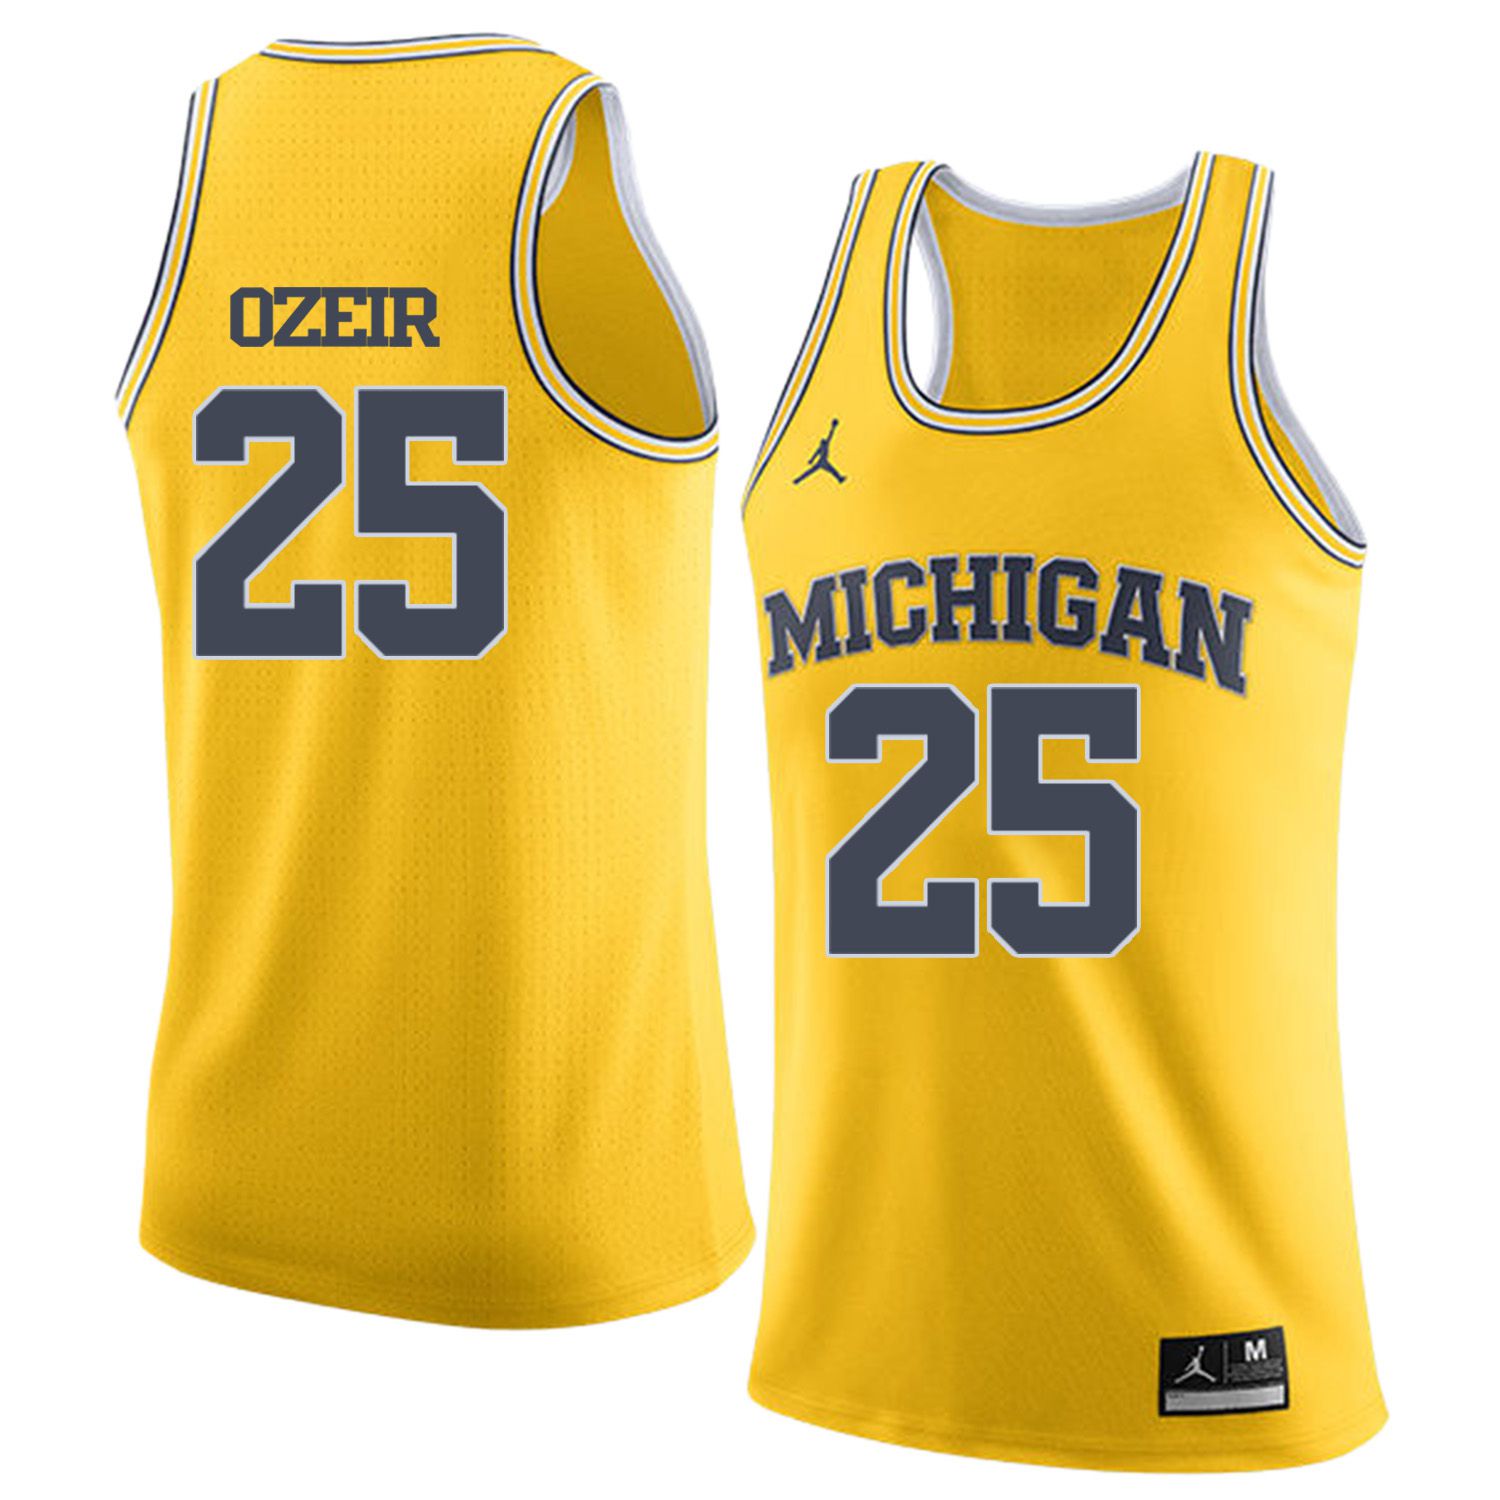 Men Jordan University of Michigan Basketball Yellow #25 Ozeir Customized NCAA Jerseys->customized ncaa jersey->Custom Jersey